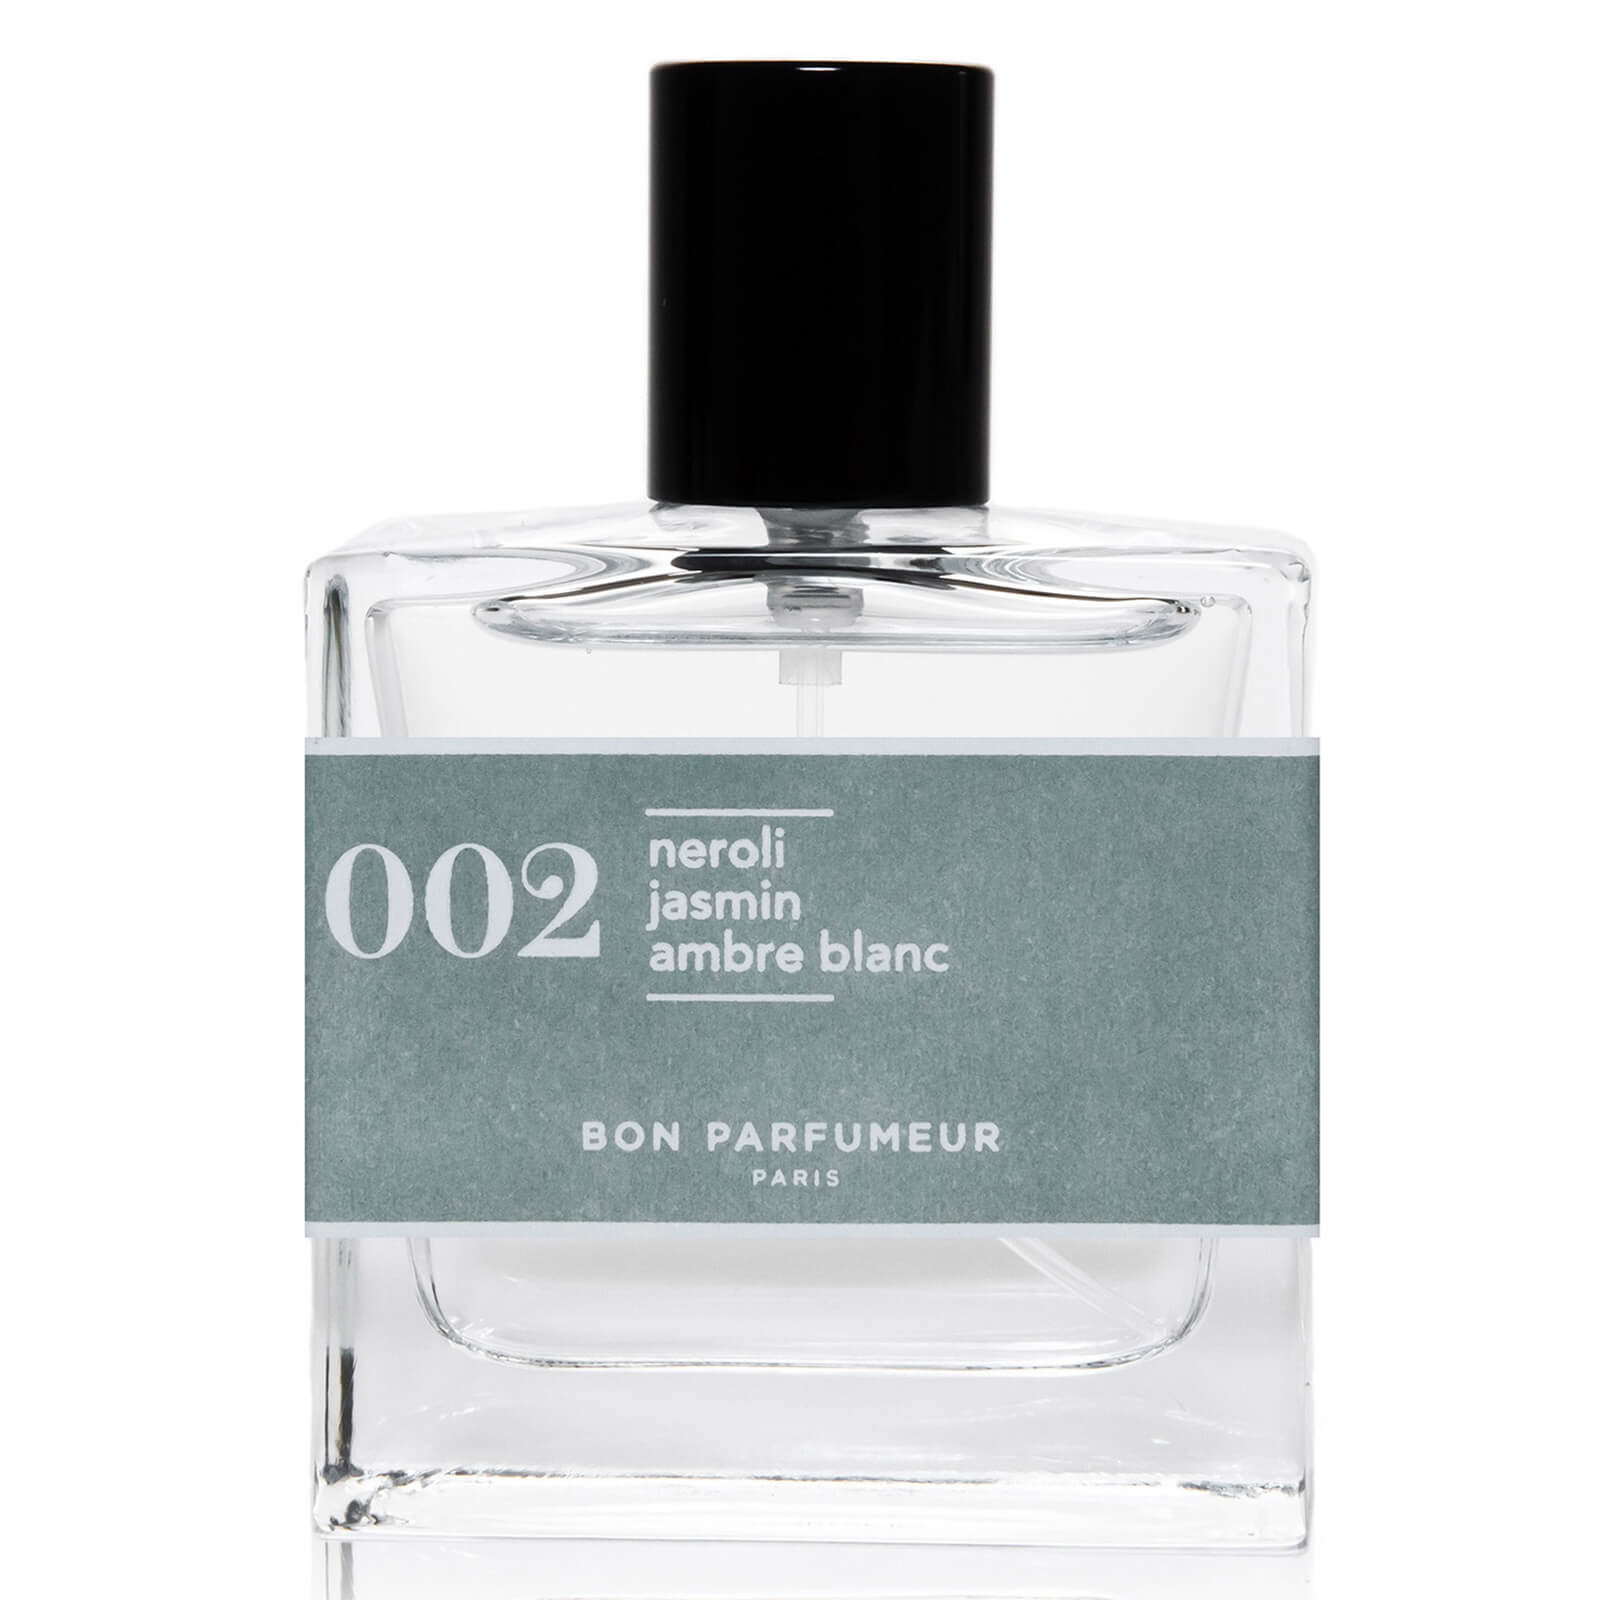 Bon Parfumeur 002 Neroli, Jasmine, White Amber Eau de Parfum (Various Sizes) - 30ml